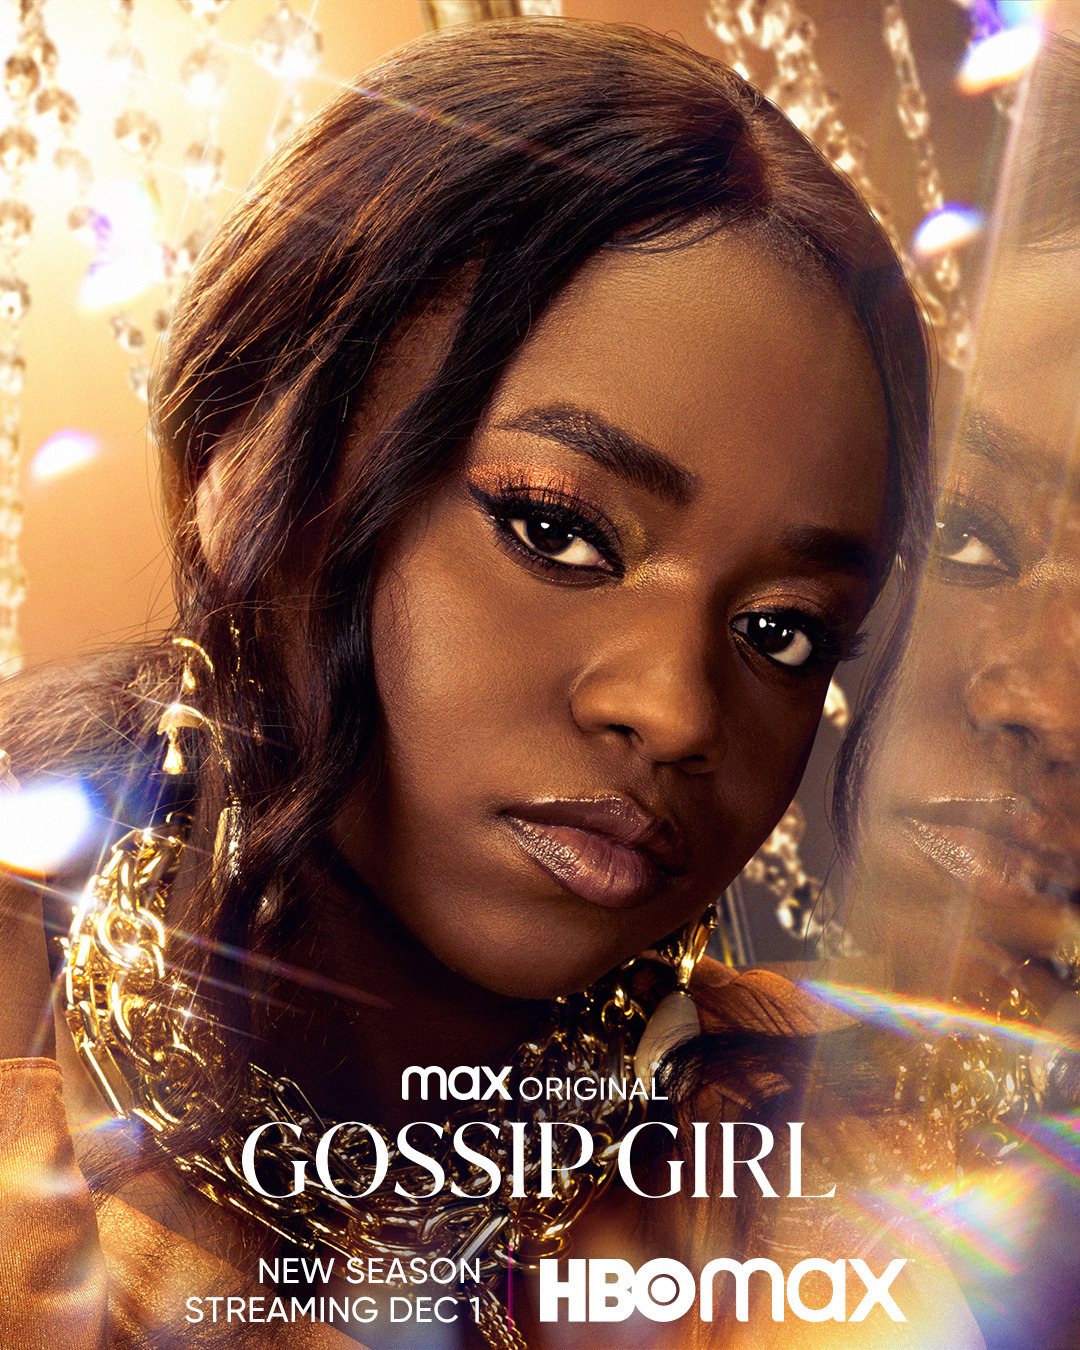 gossip girl movie poster  Gossip girl, Girl movies, Girl posters